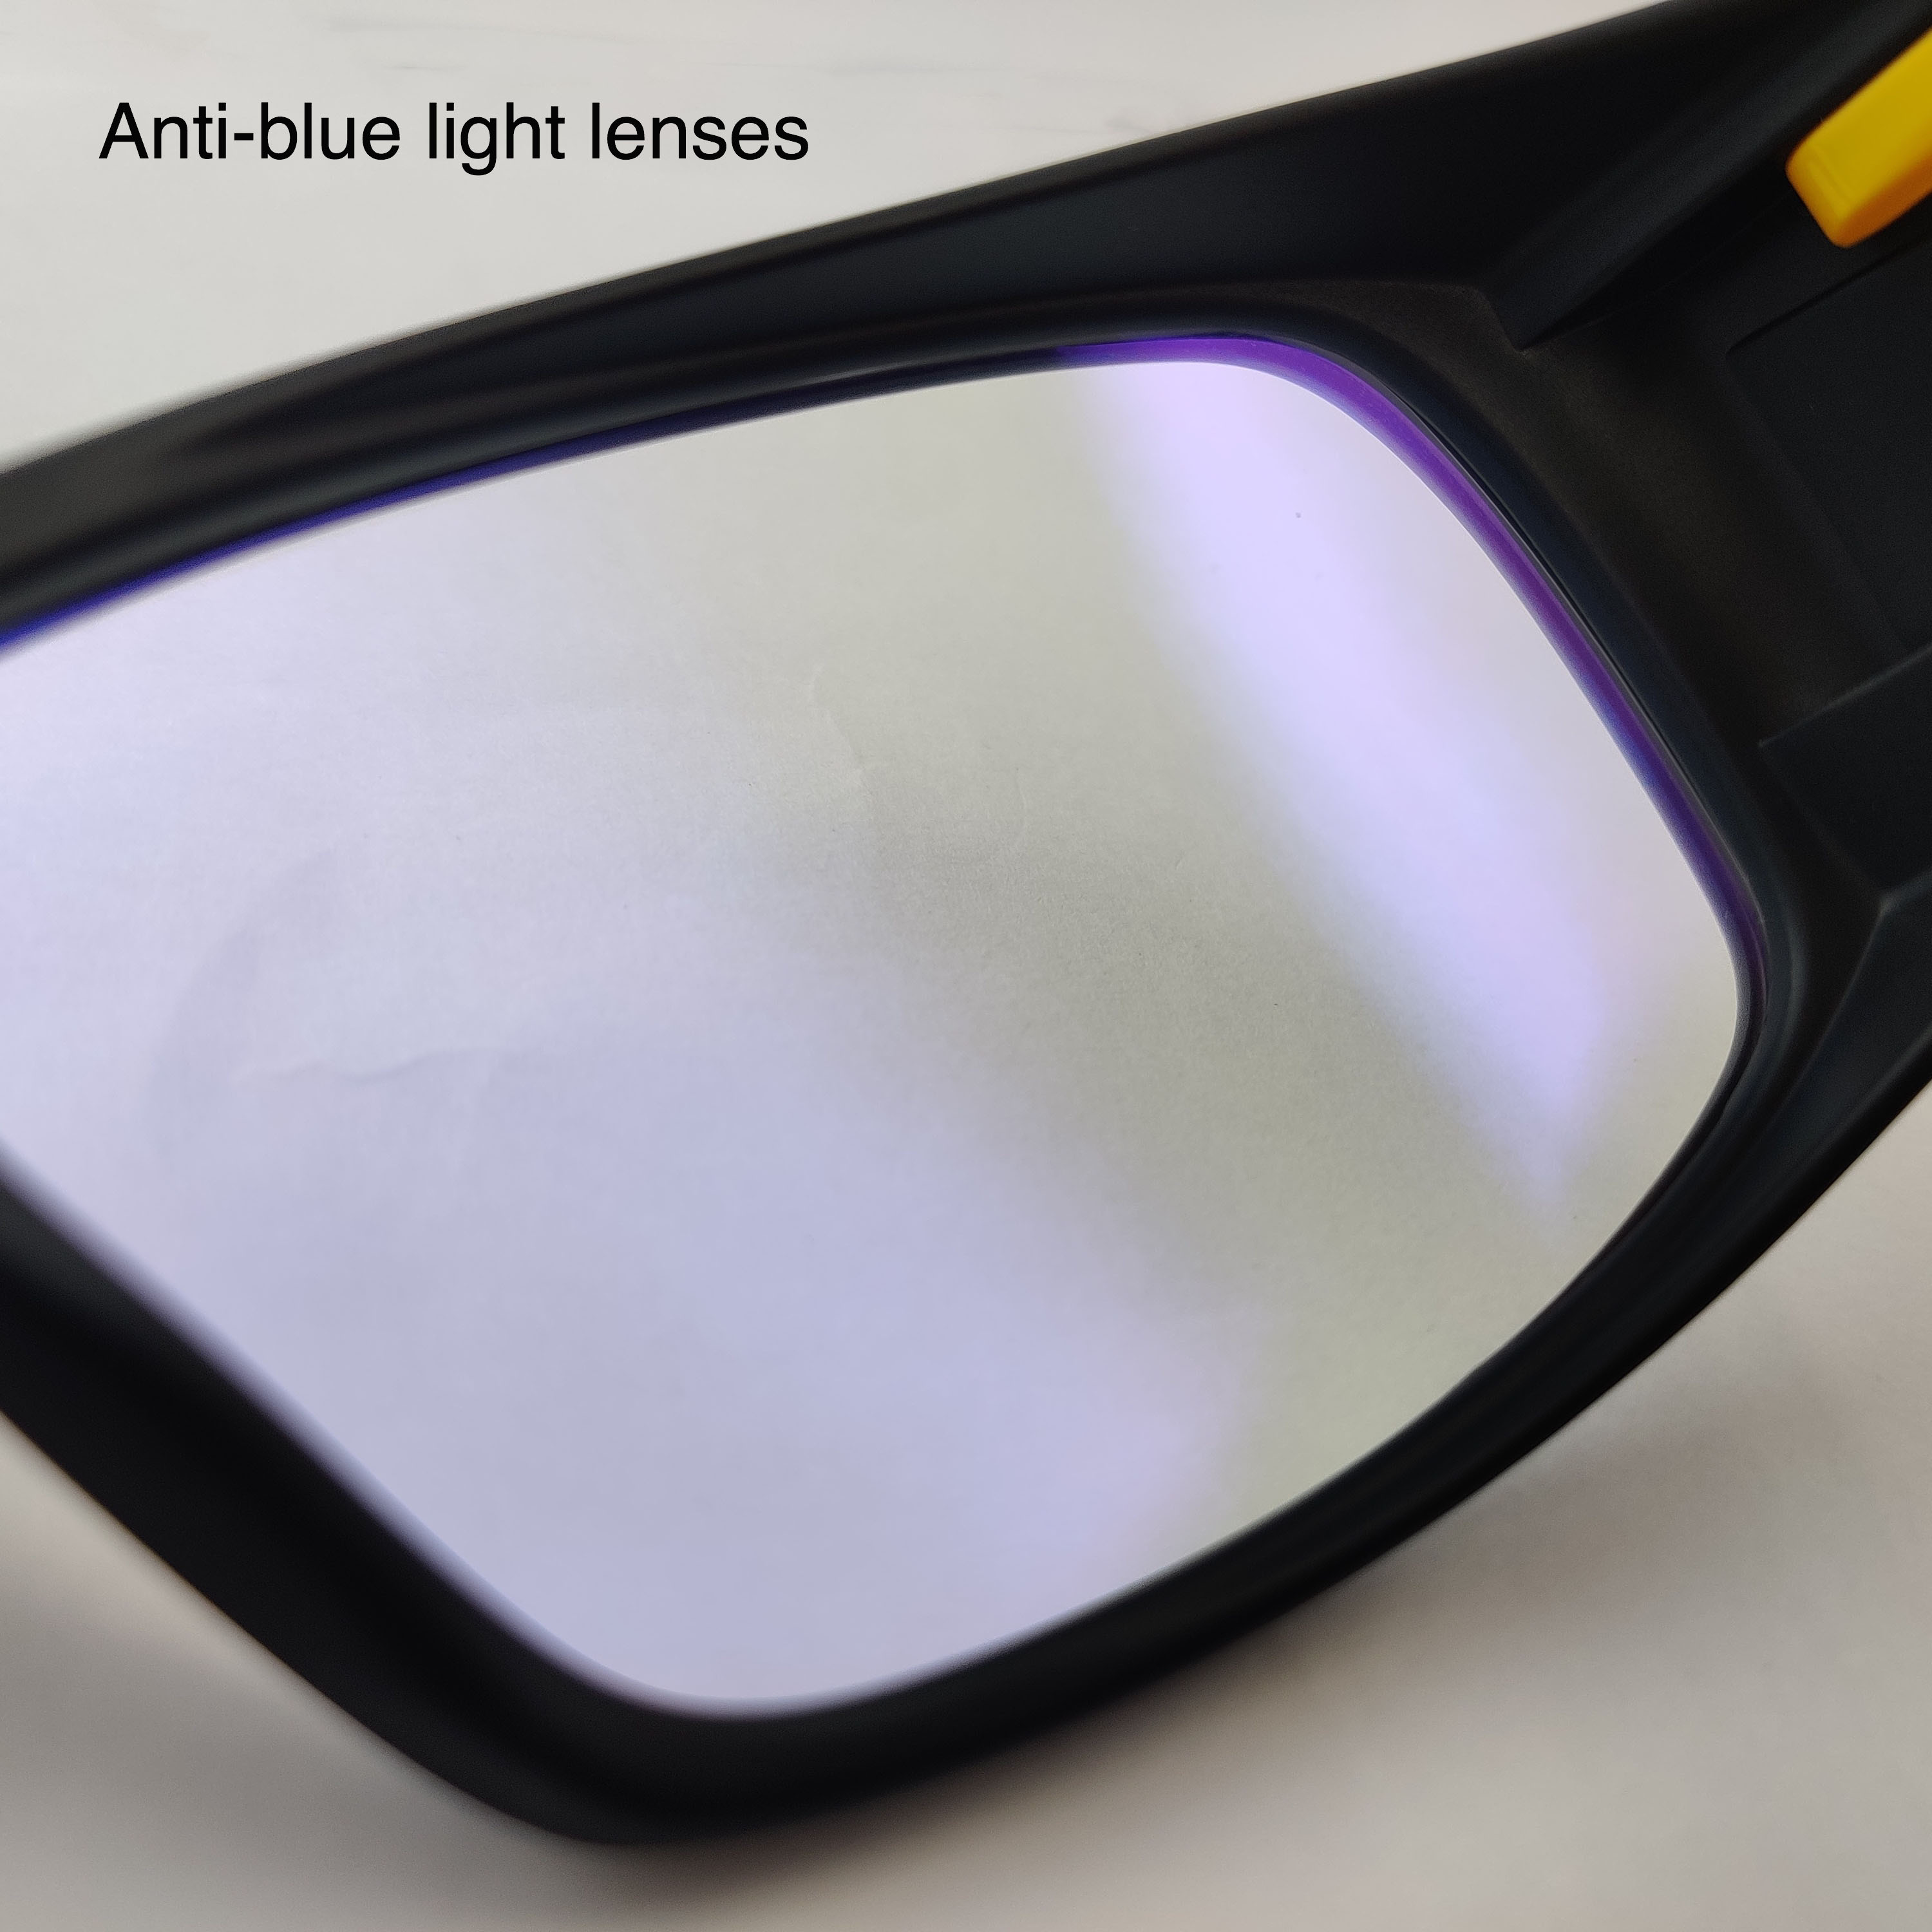 Ajuste sobre ajuste de luz azul con anteojos ópticos.